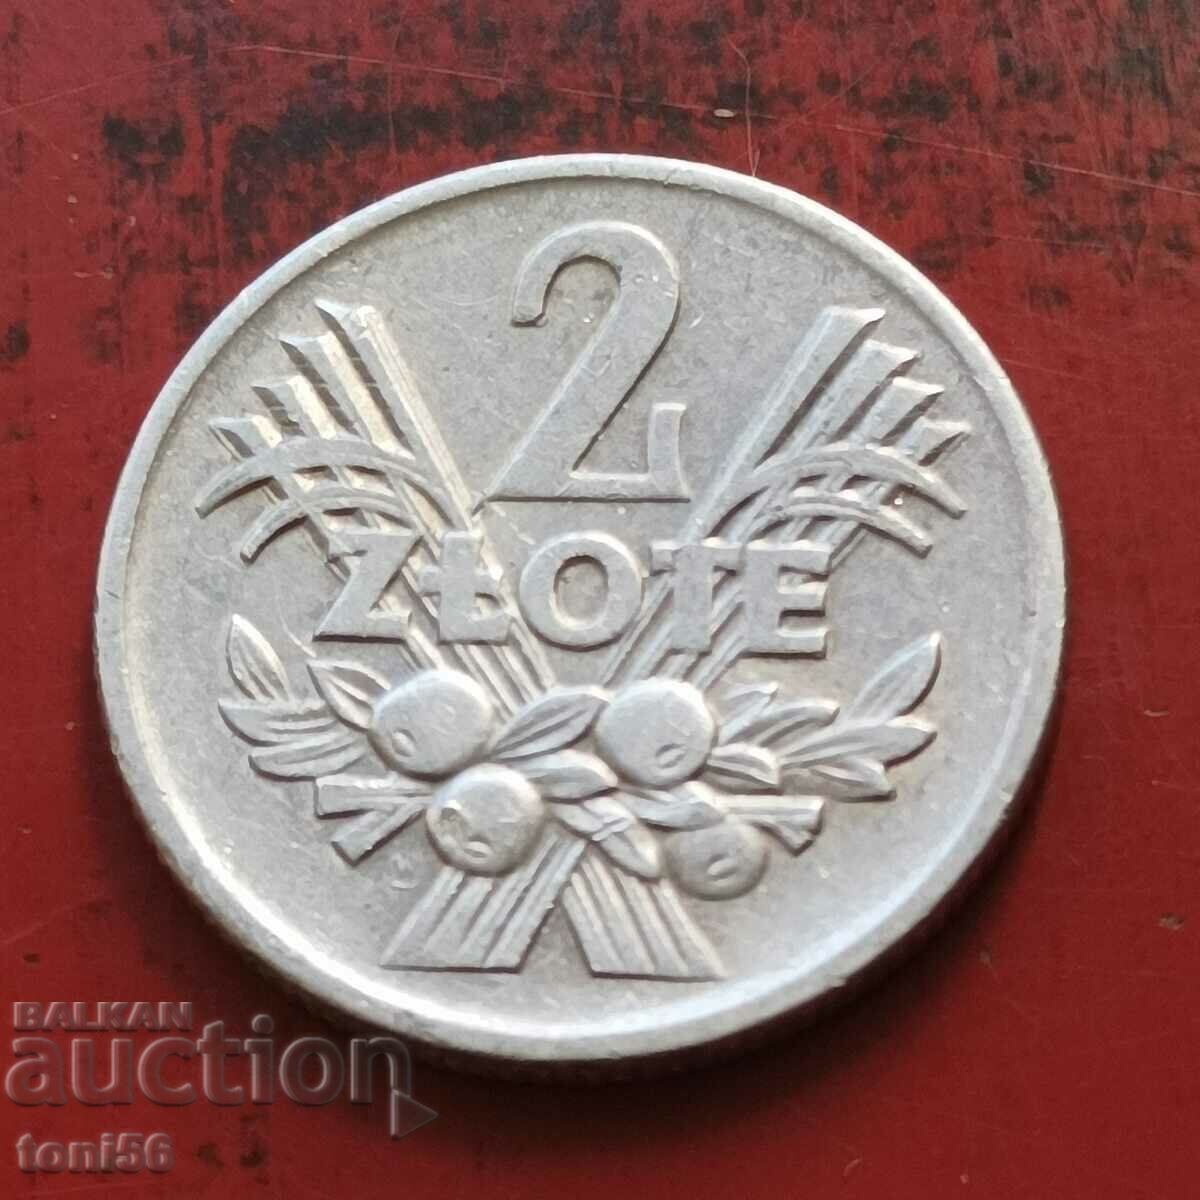 Poland 2 zlotys 1960